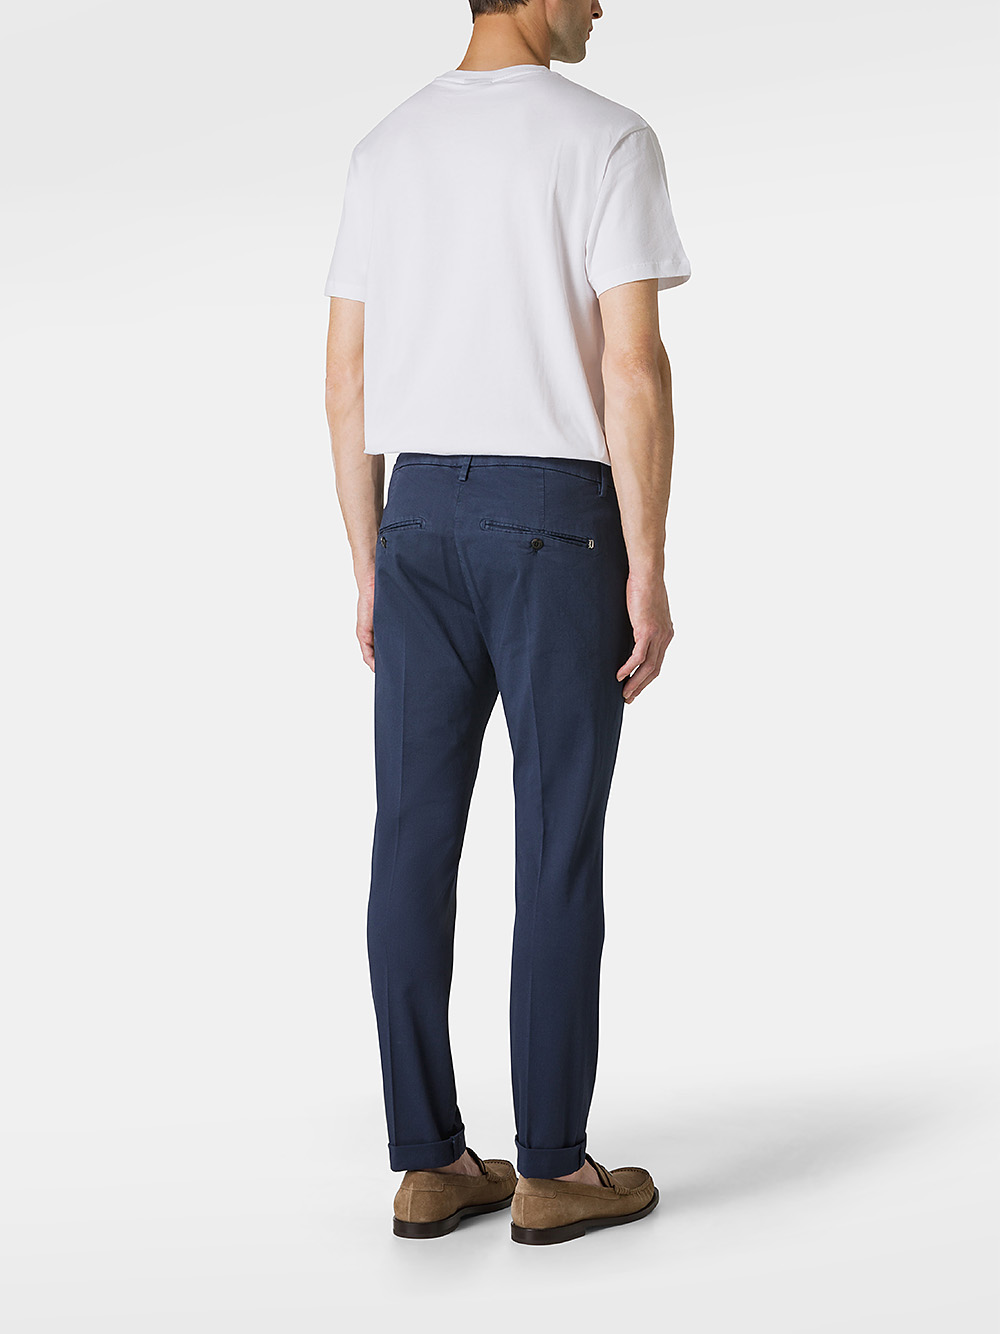 Pantaloni Gaubert in cotone stretch slim chino